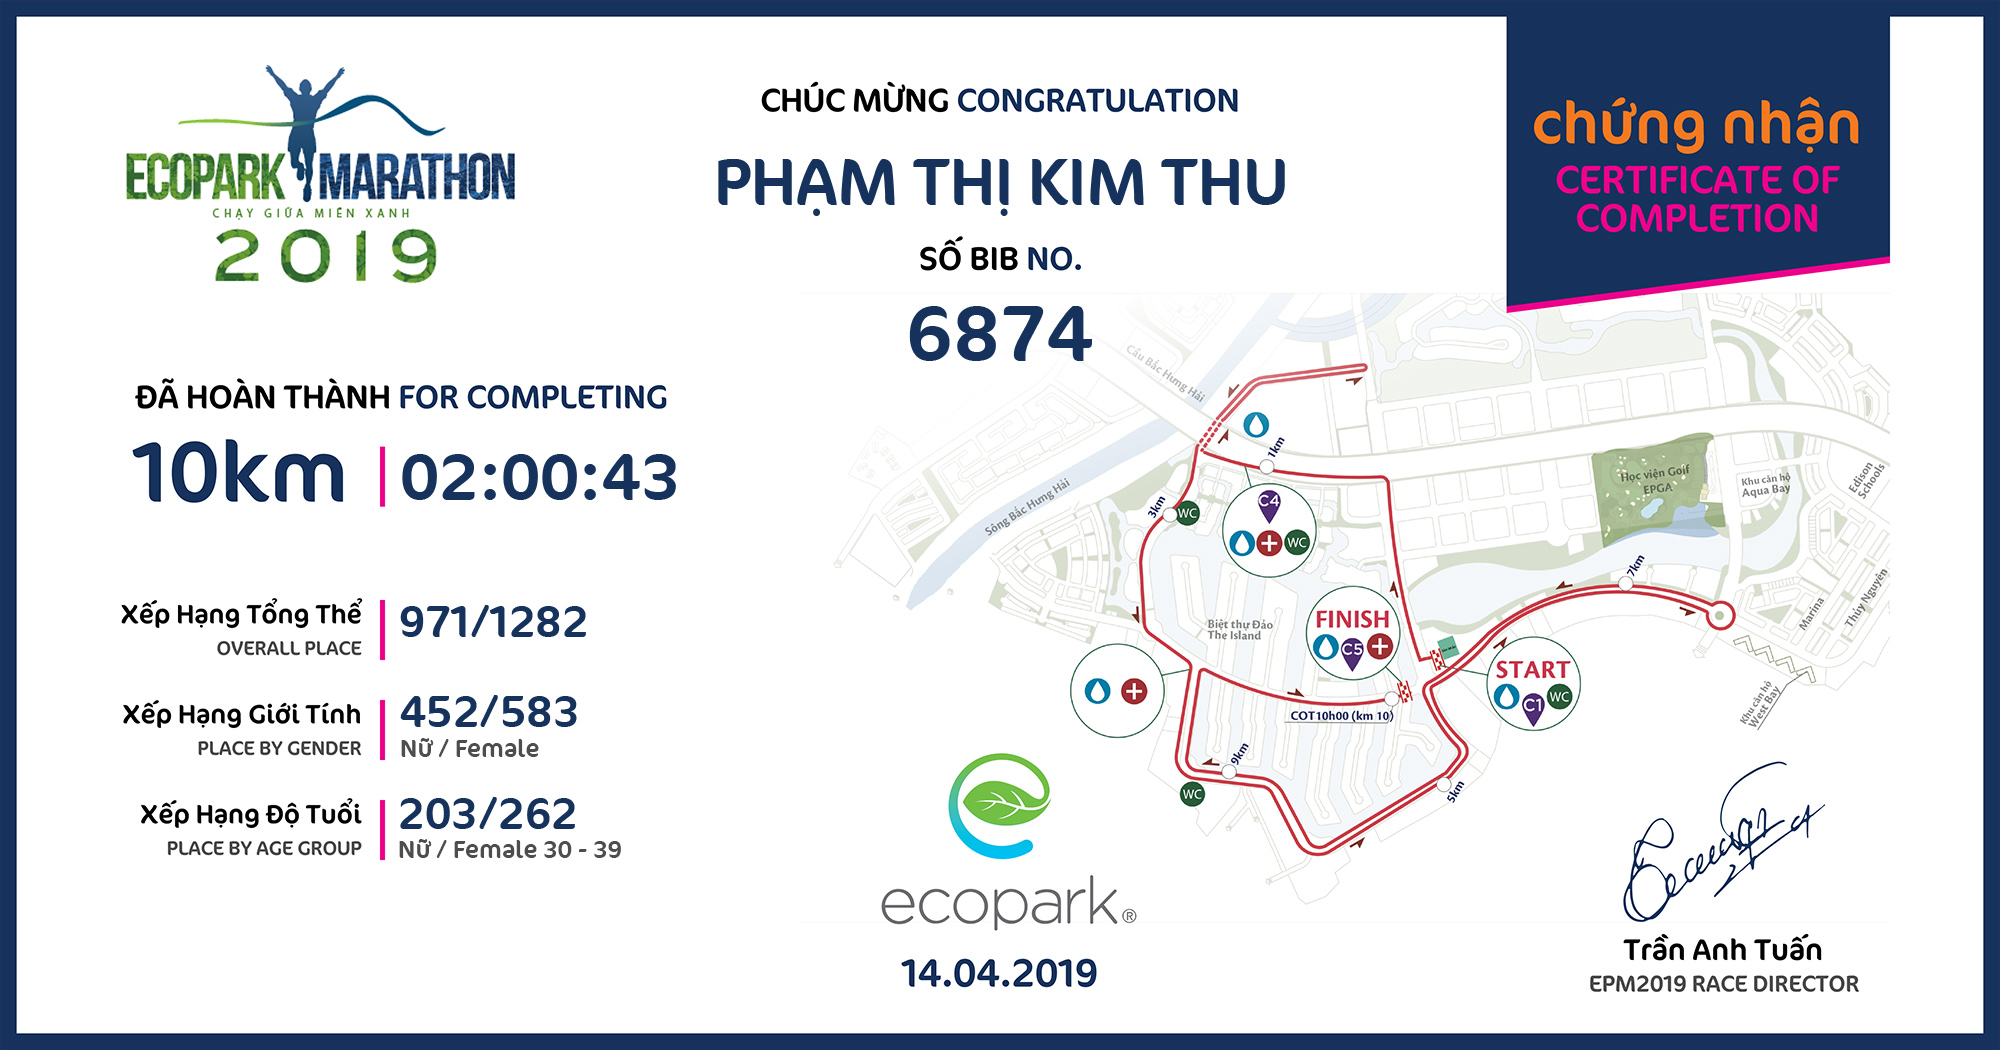 6874 - Phạm Thị Kim Thu